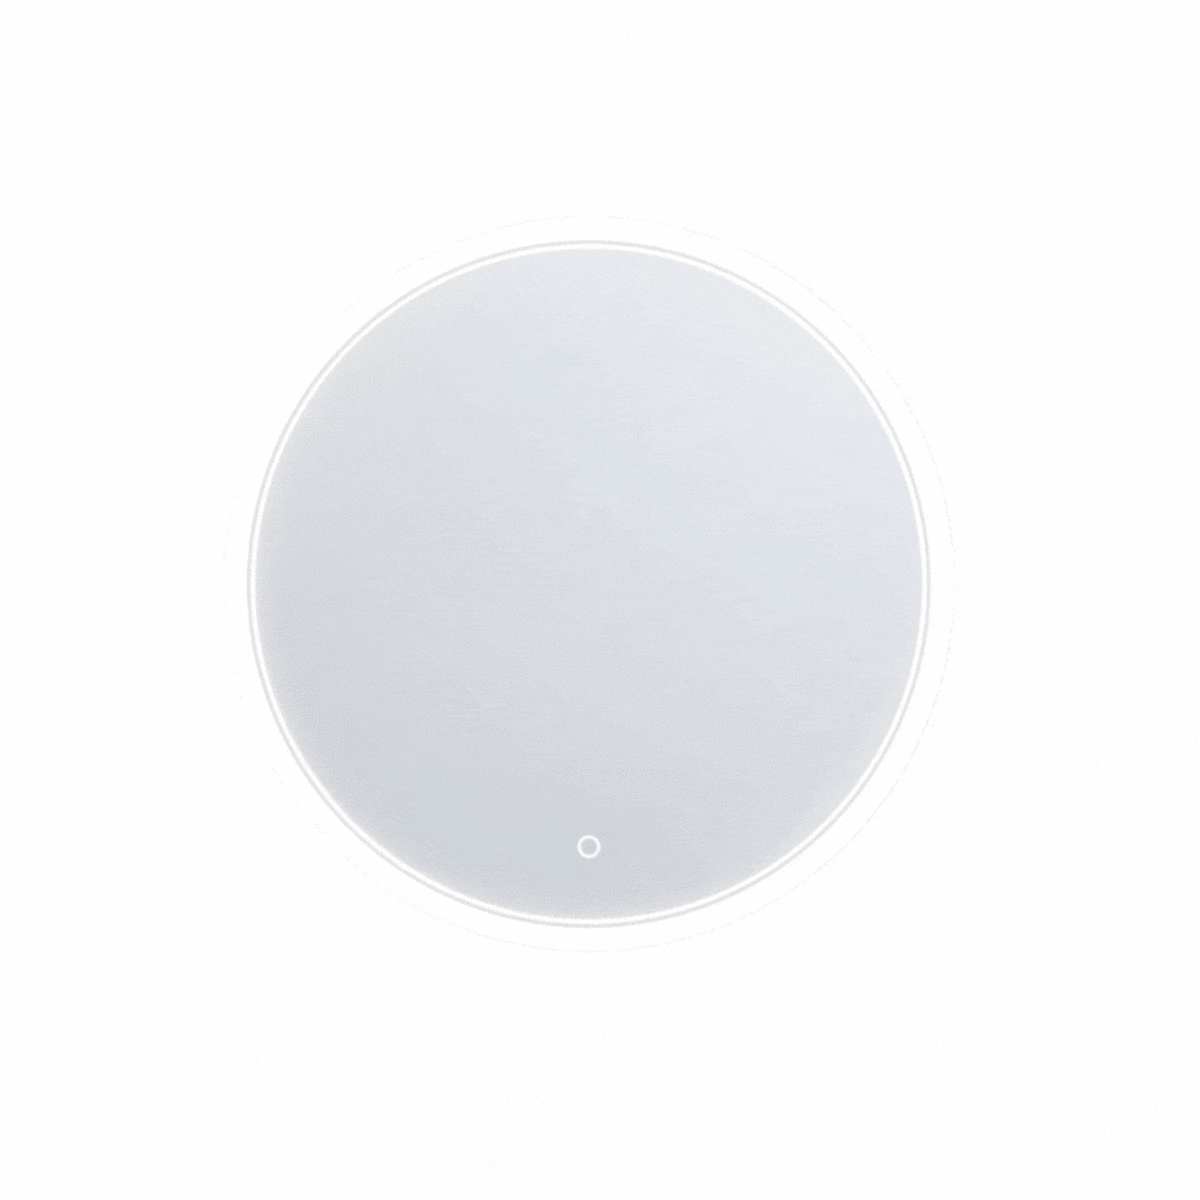 Zrcadlo Orandiu L 60 cm s LED podsvícením